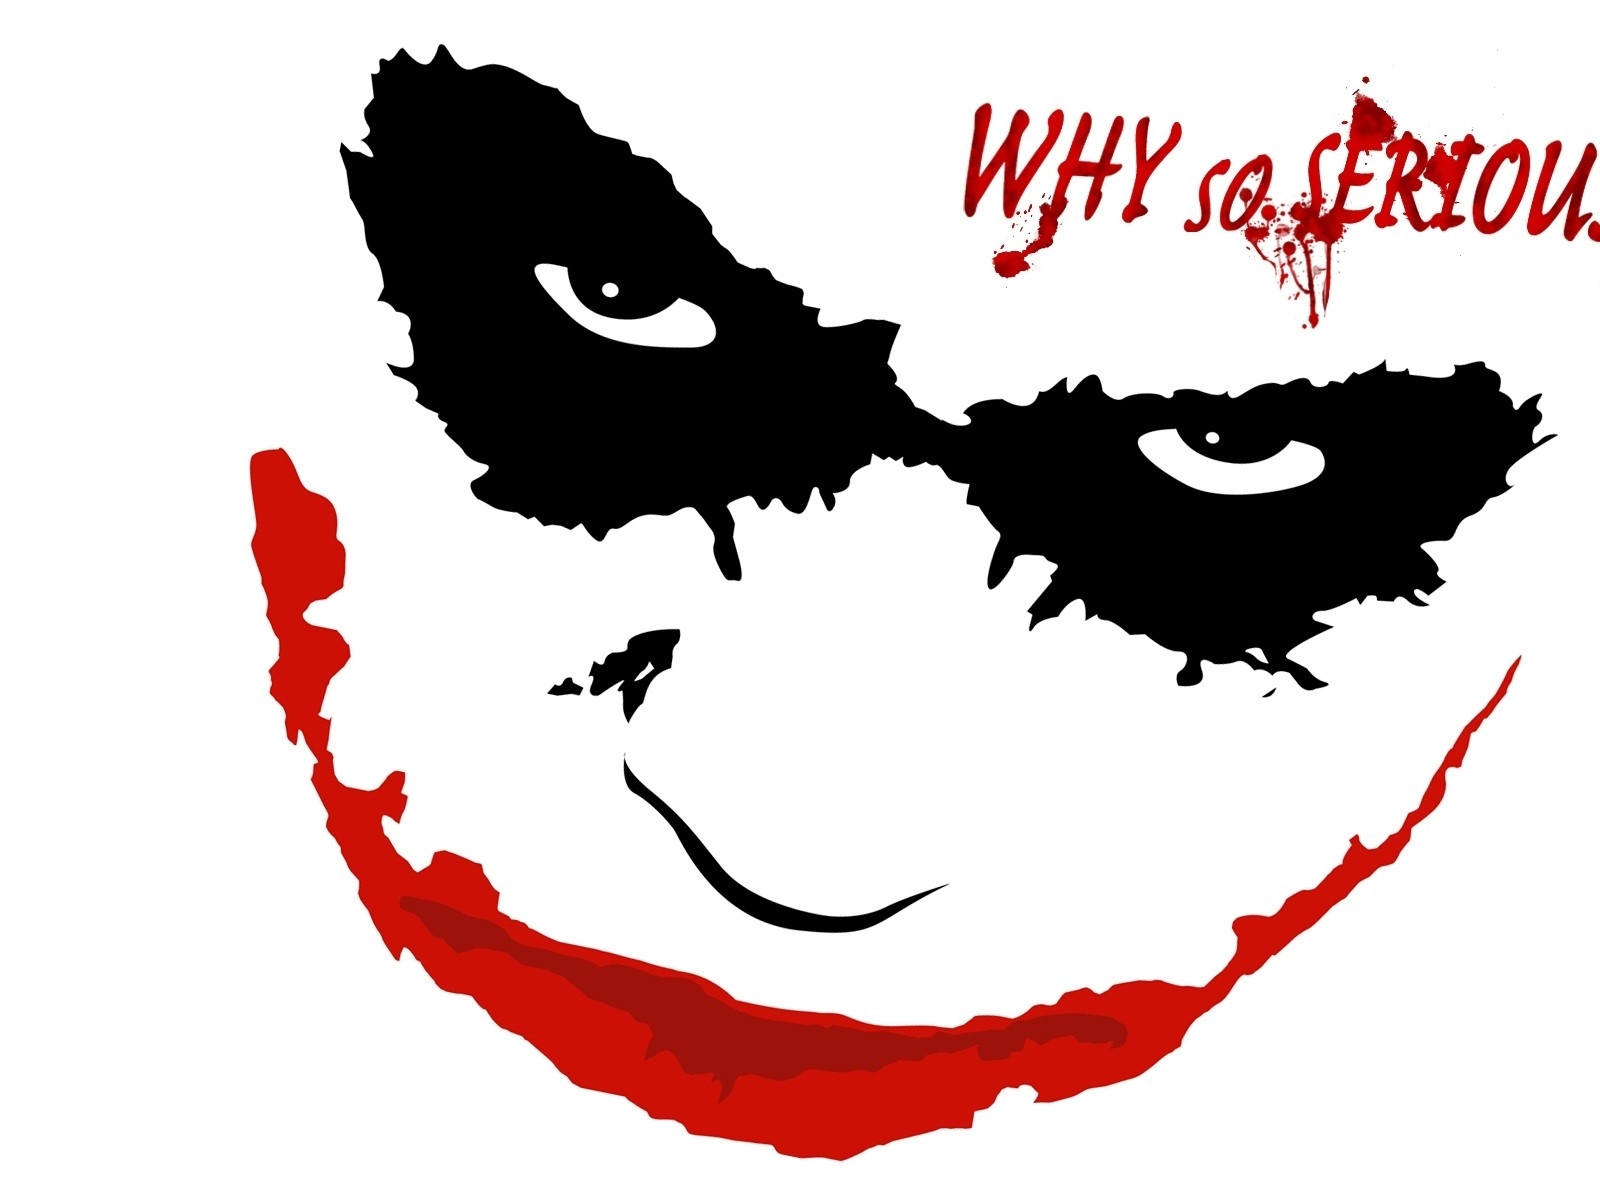 Jokers smile, why so serious? 4K wallpaper download